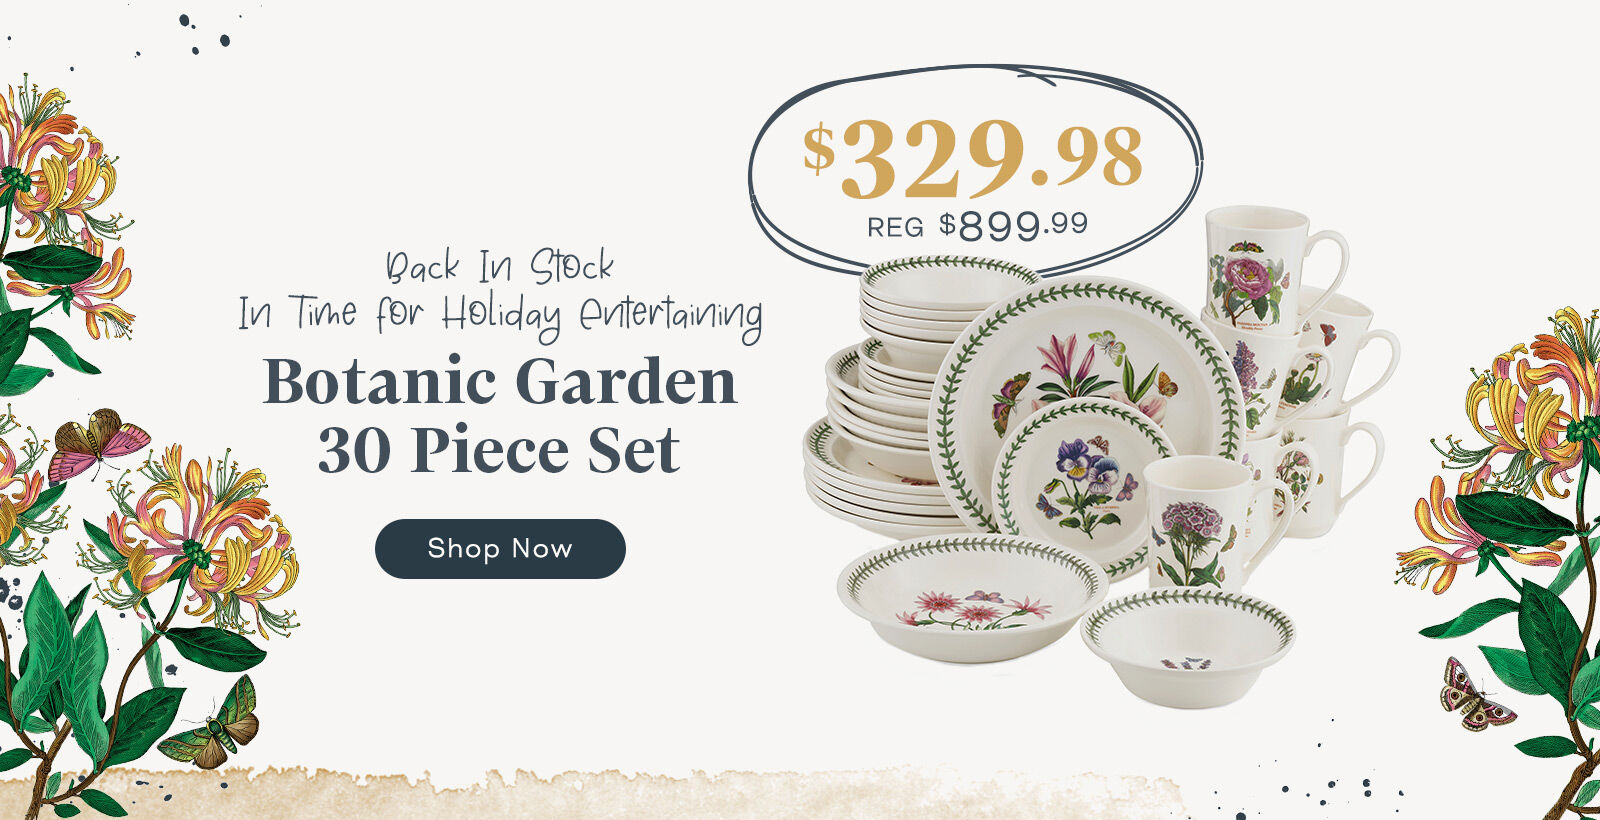 Botanic Garden 30 Piece Set $329.98 No Additional discounts Apply